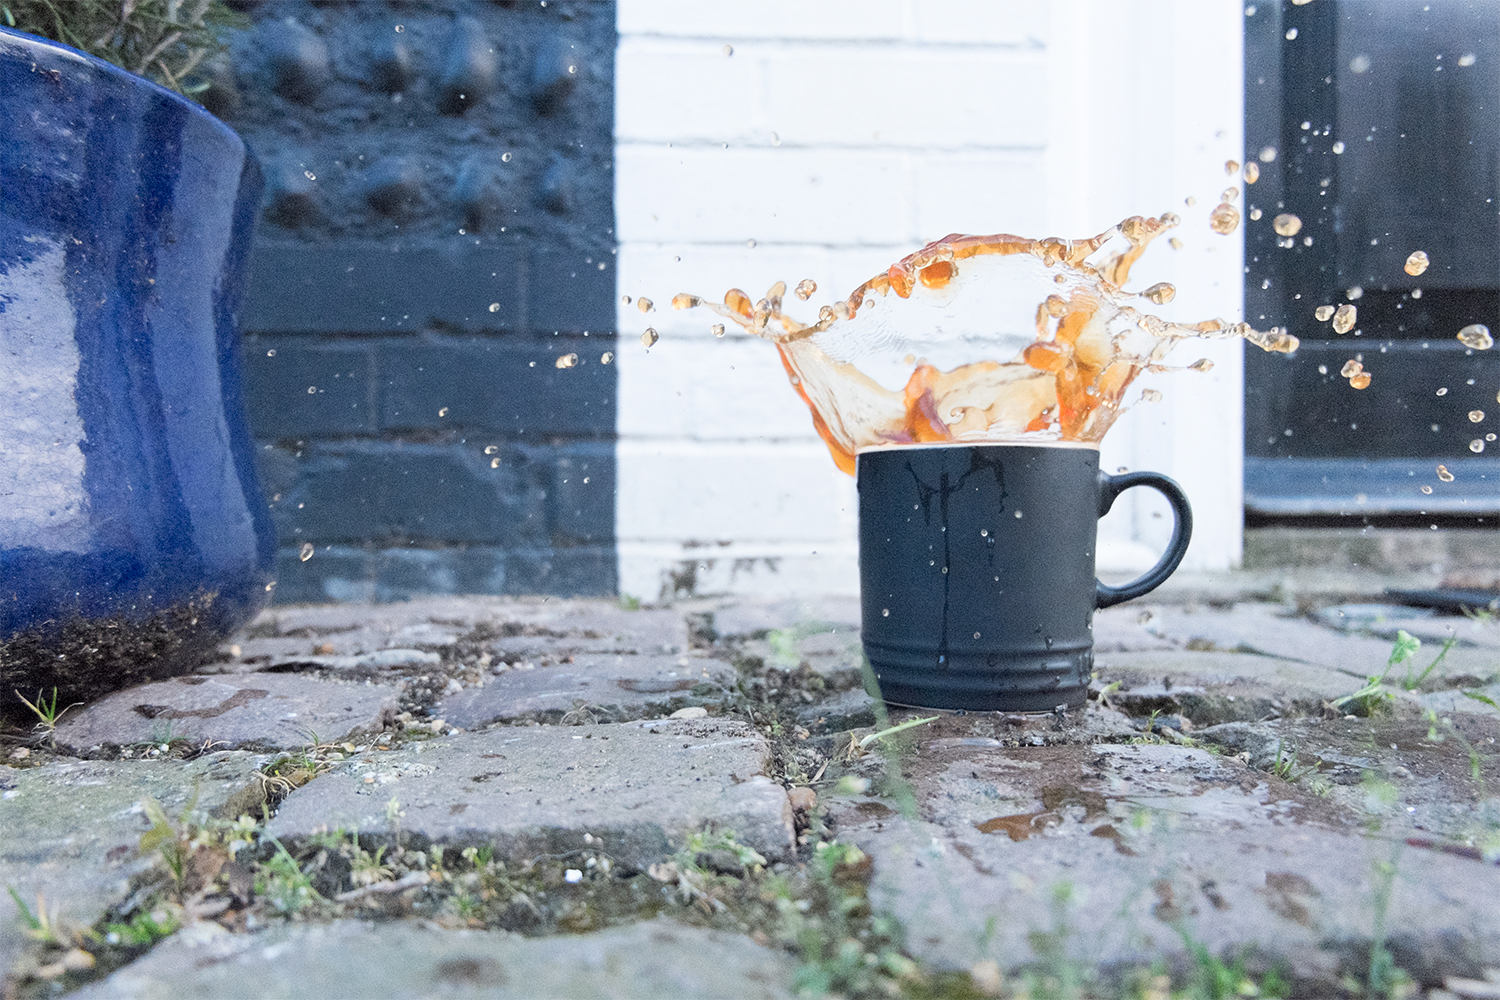 Tea splashing out of a mug, outdoors on a patio. Plant pot on the left.